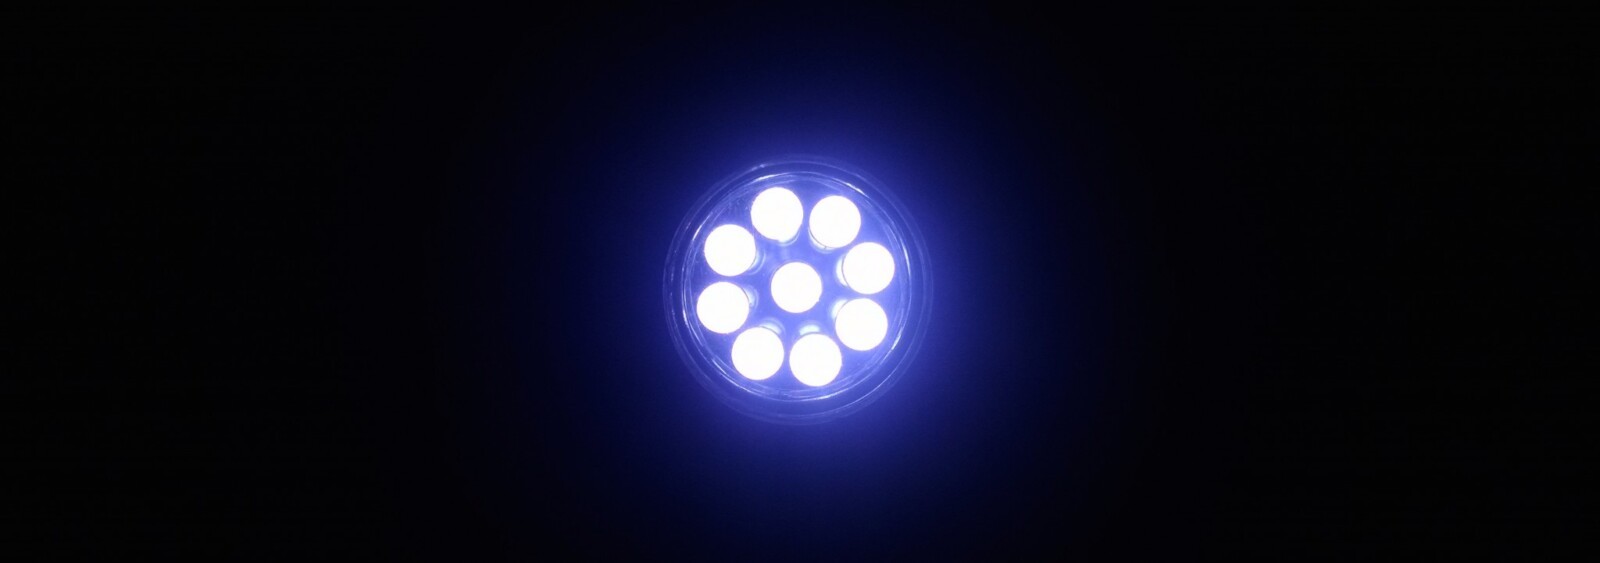 Why are LED's so Bright? - LEDinAction